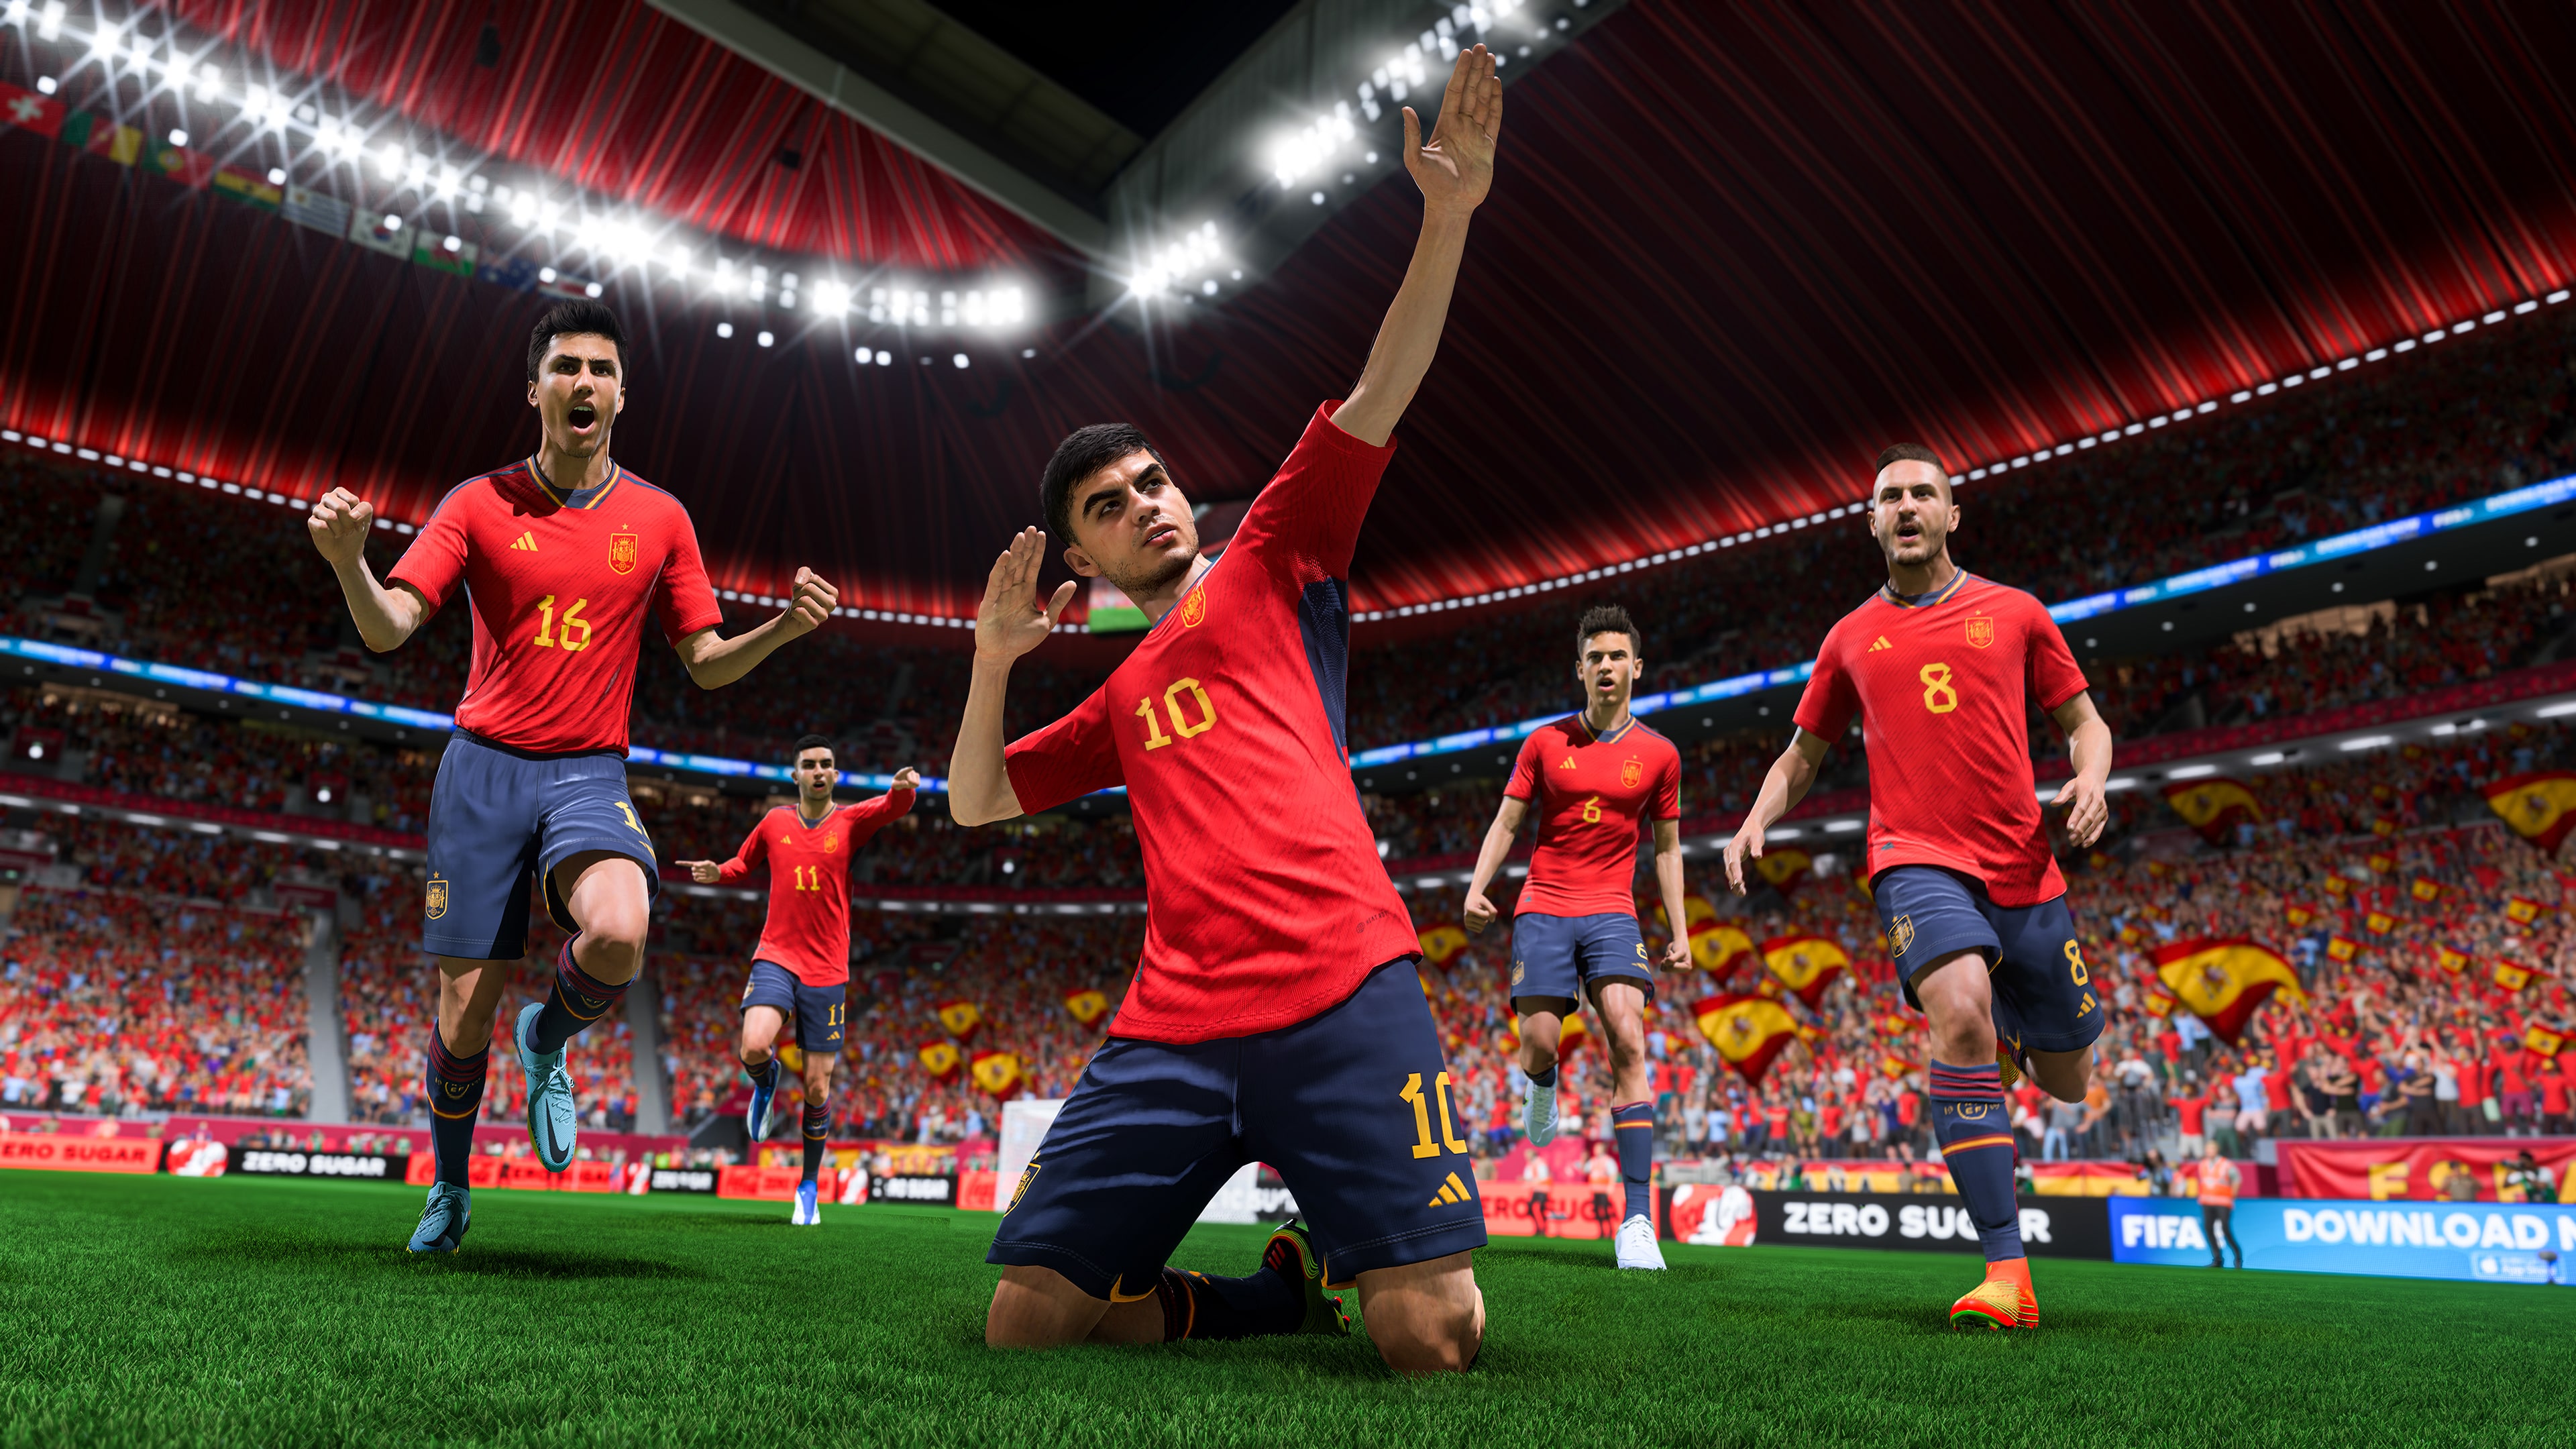 FIFA 23 PS4 